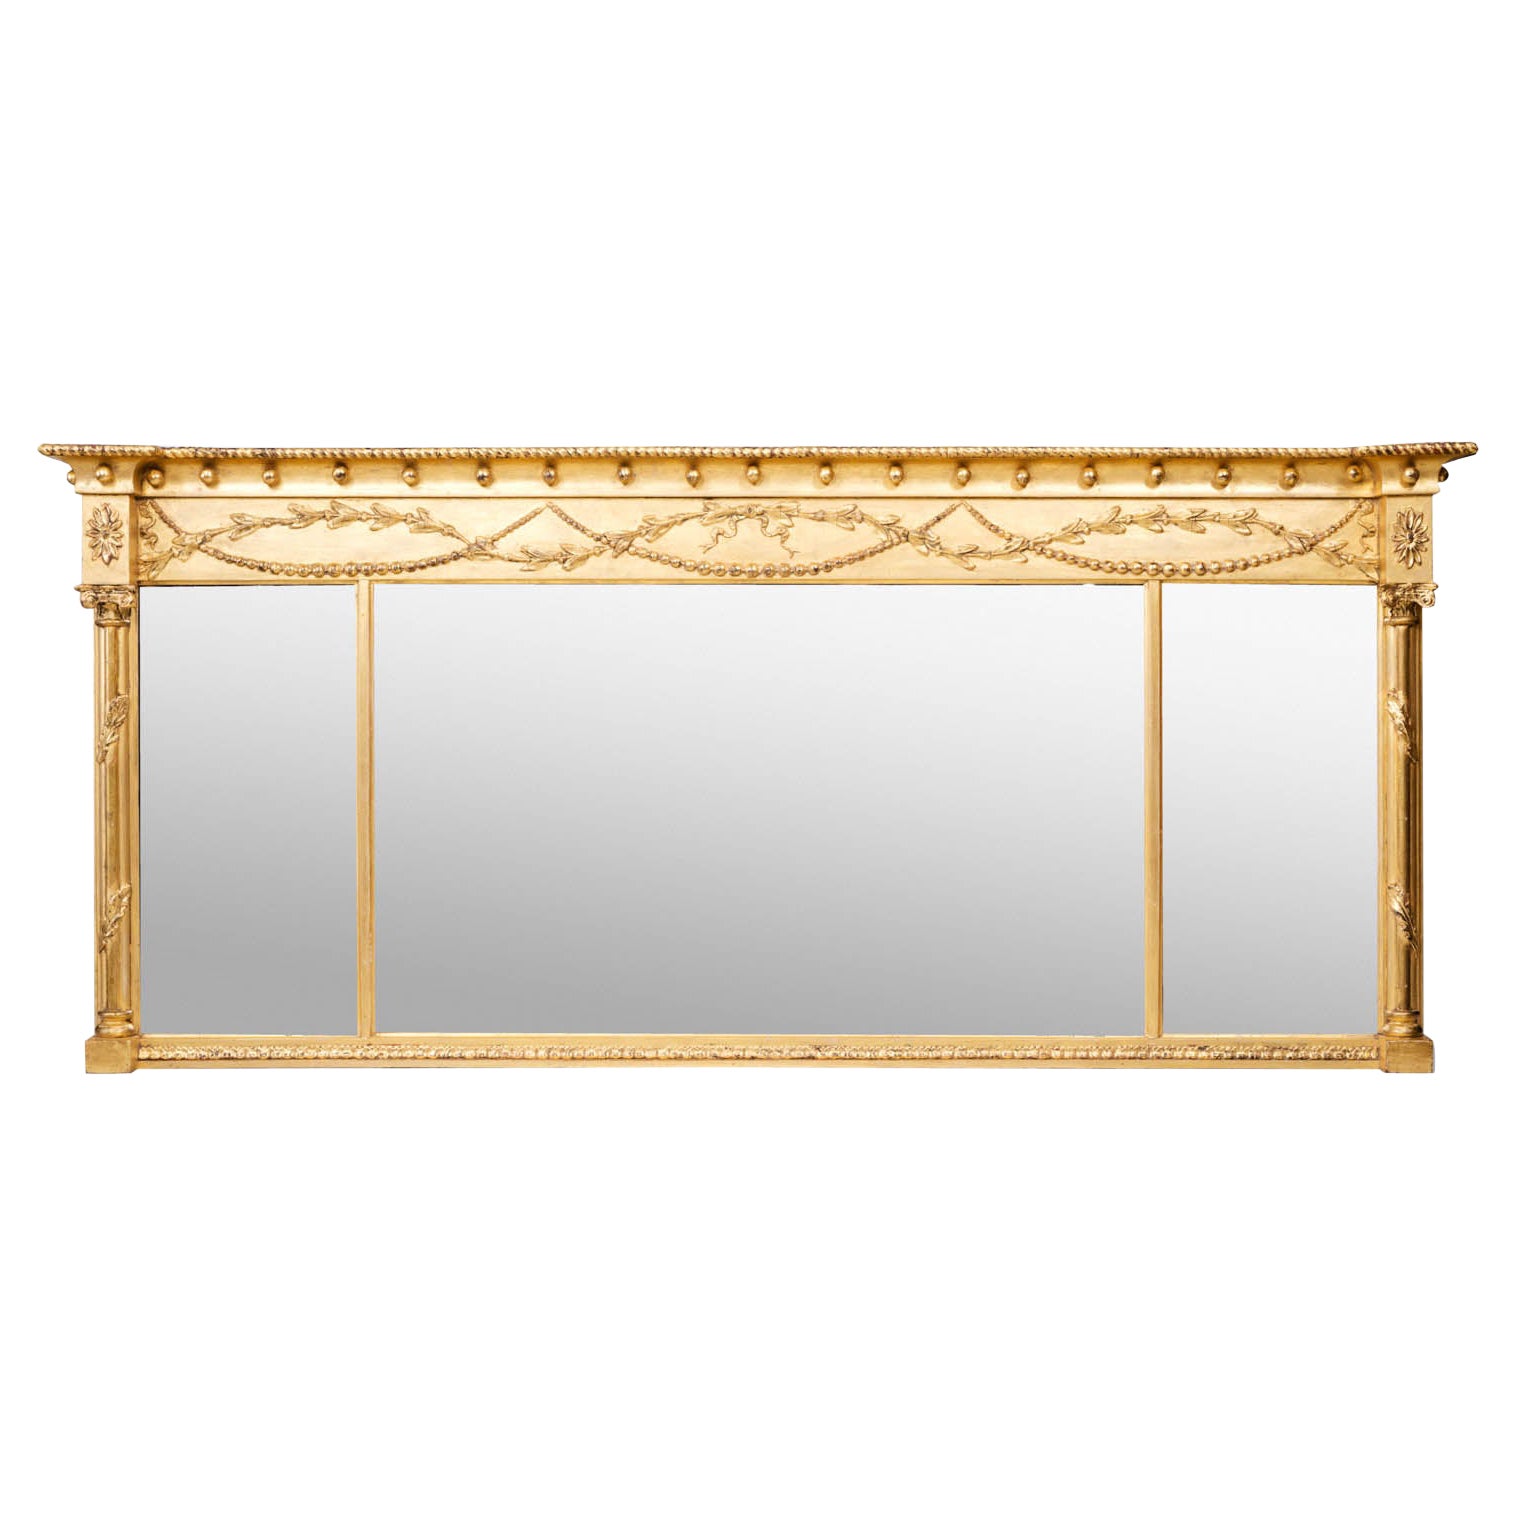 19th Century Regency Gilt Compartmental Overmantel Mirror